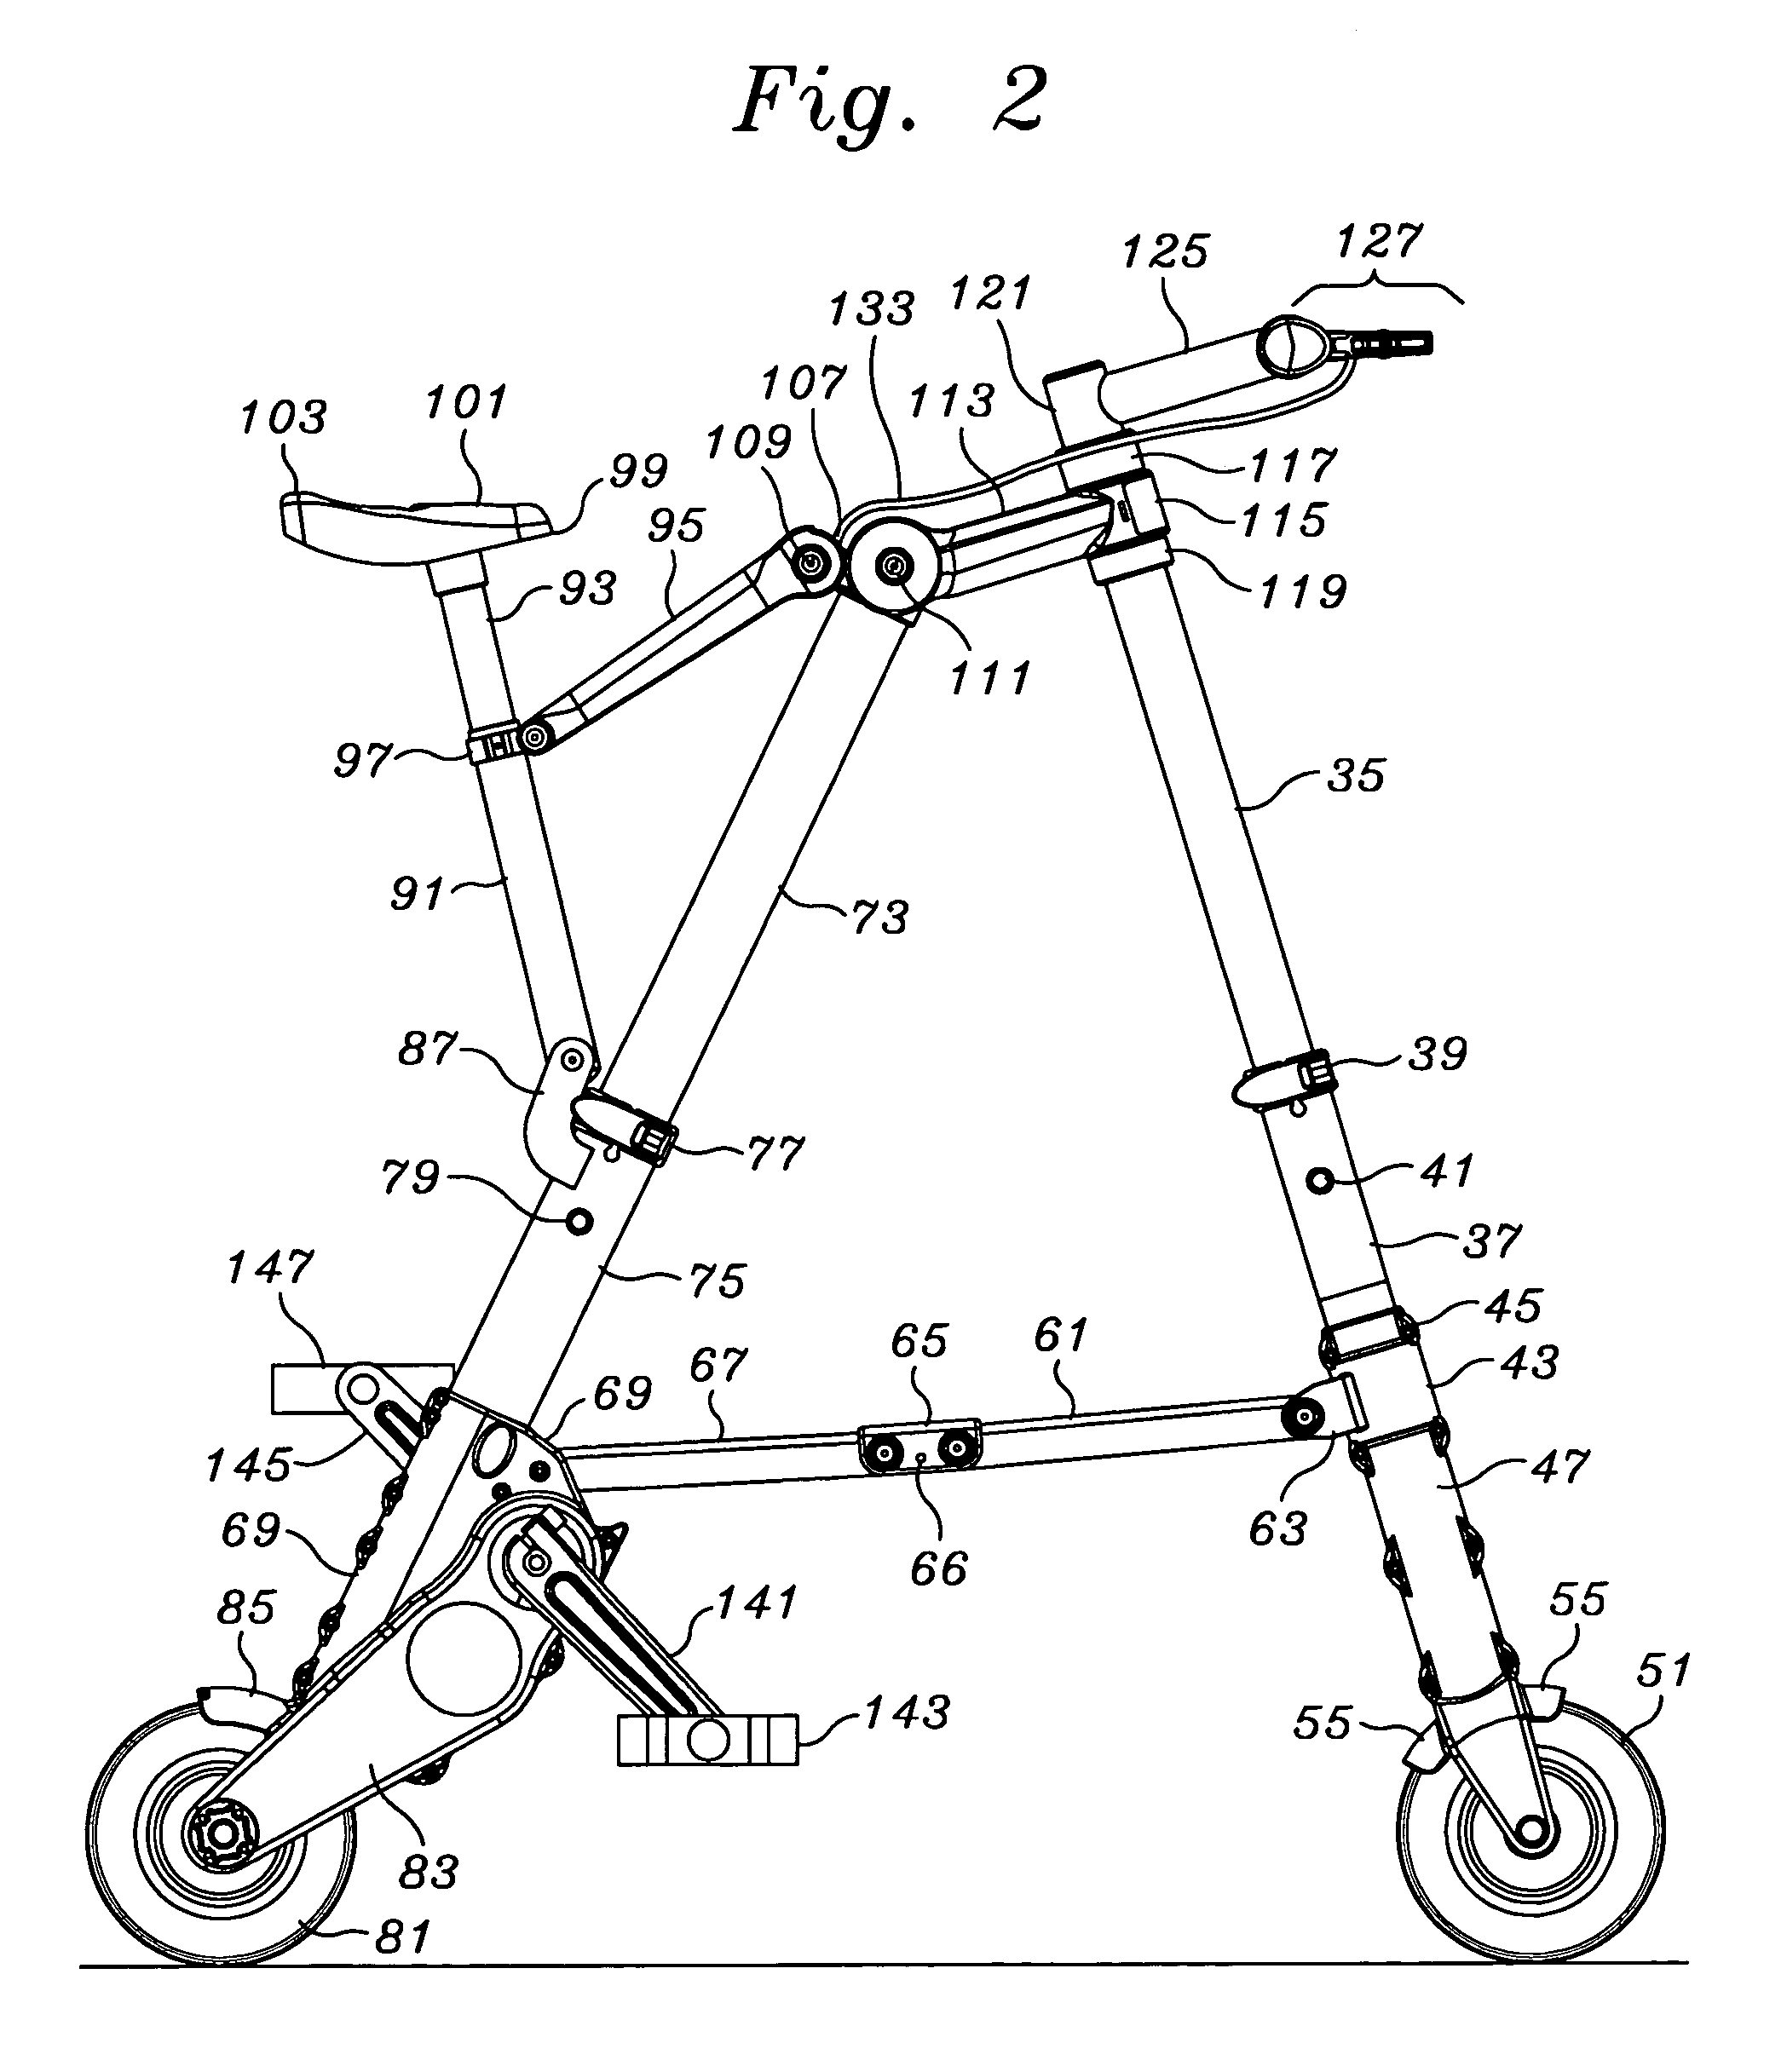 Portable folding bicycle